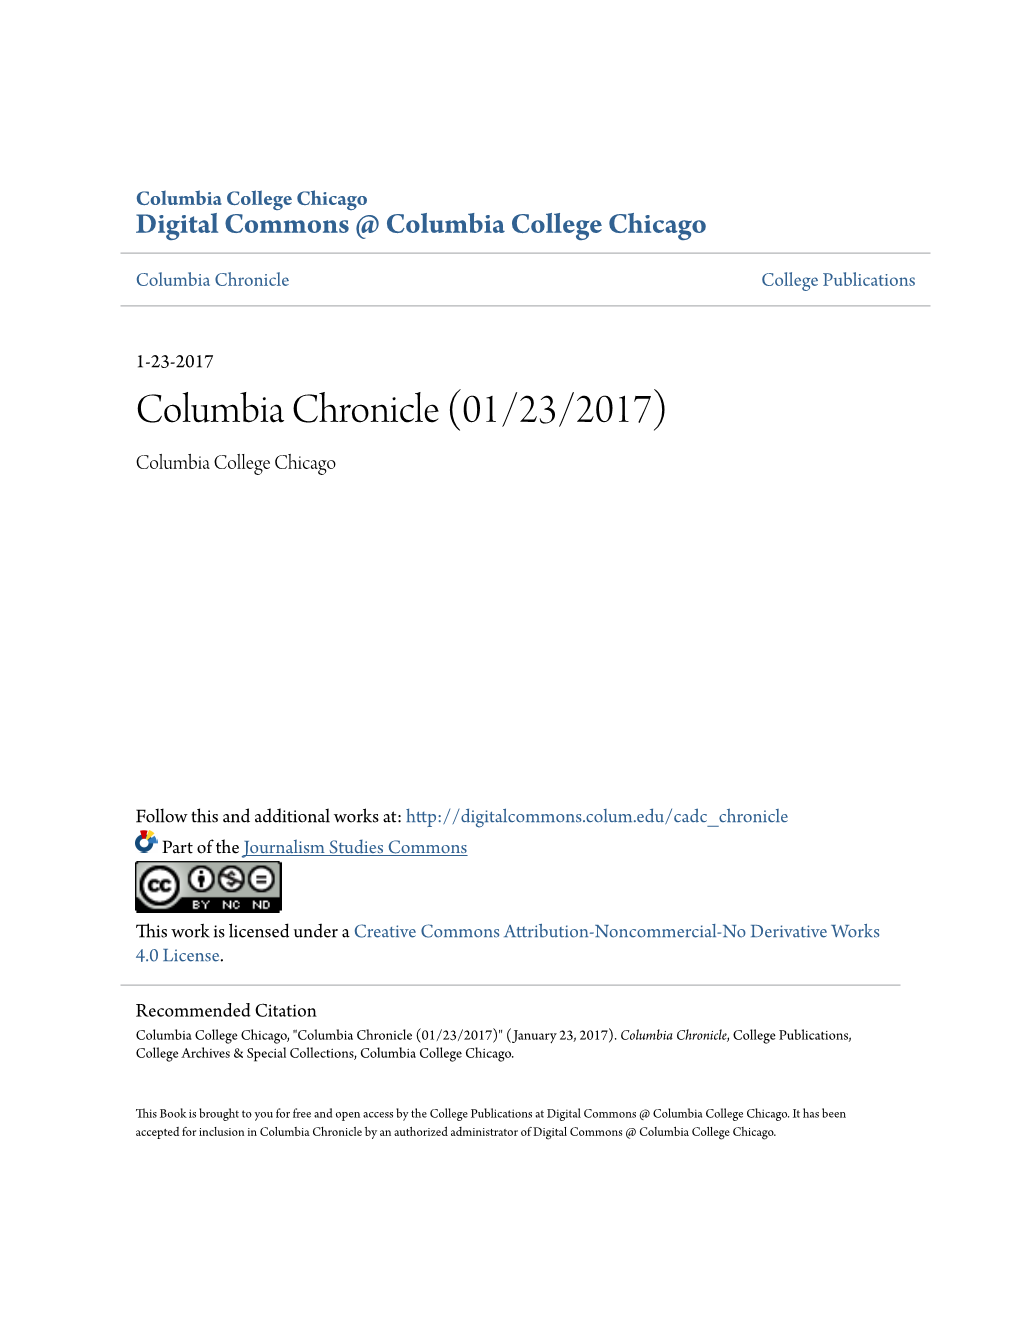 Columbia Chronicle (01/23/2017) Columbia College Chicago